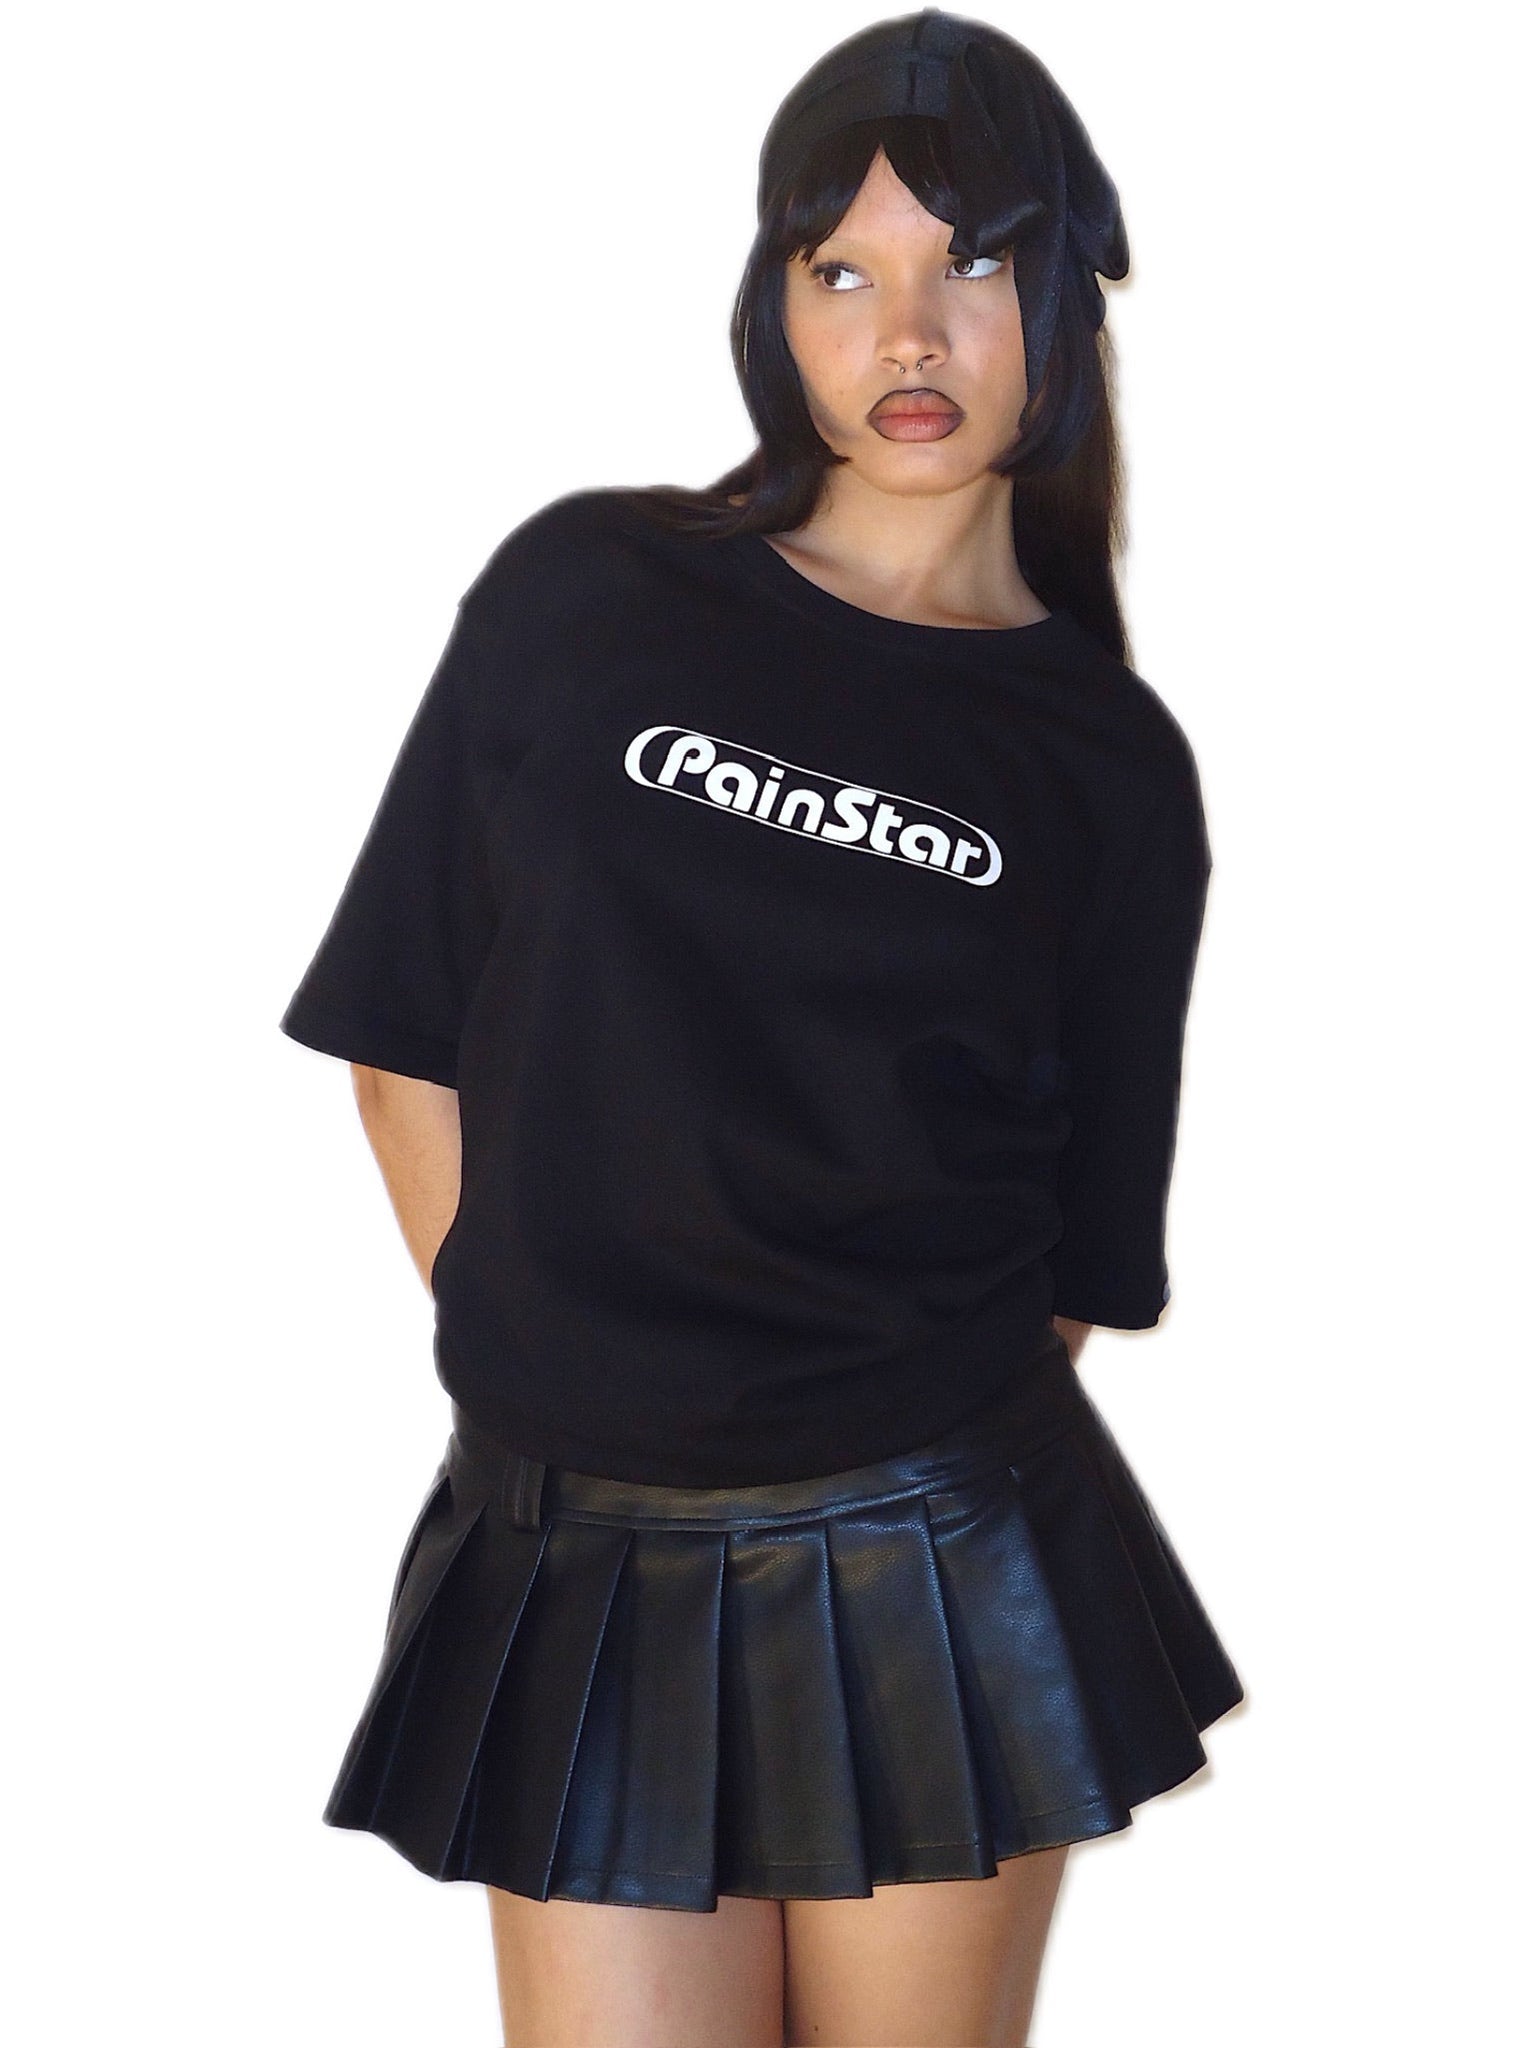 Painstar T-Shirt